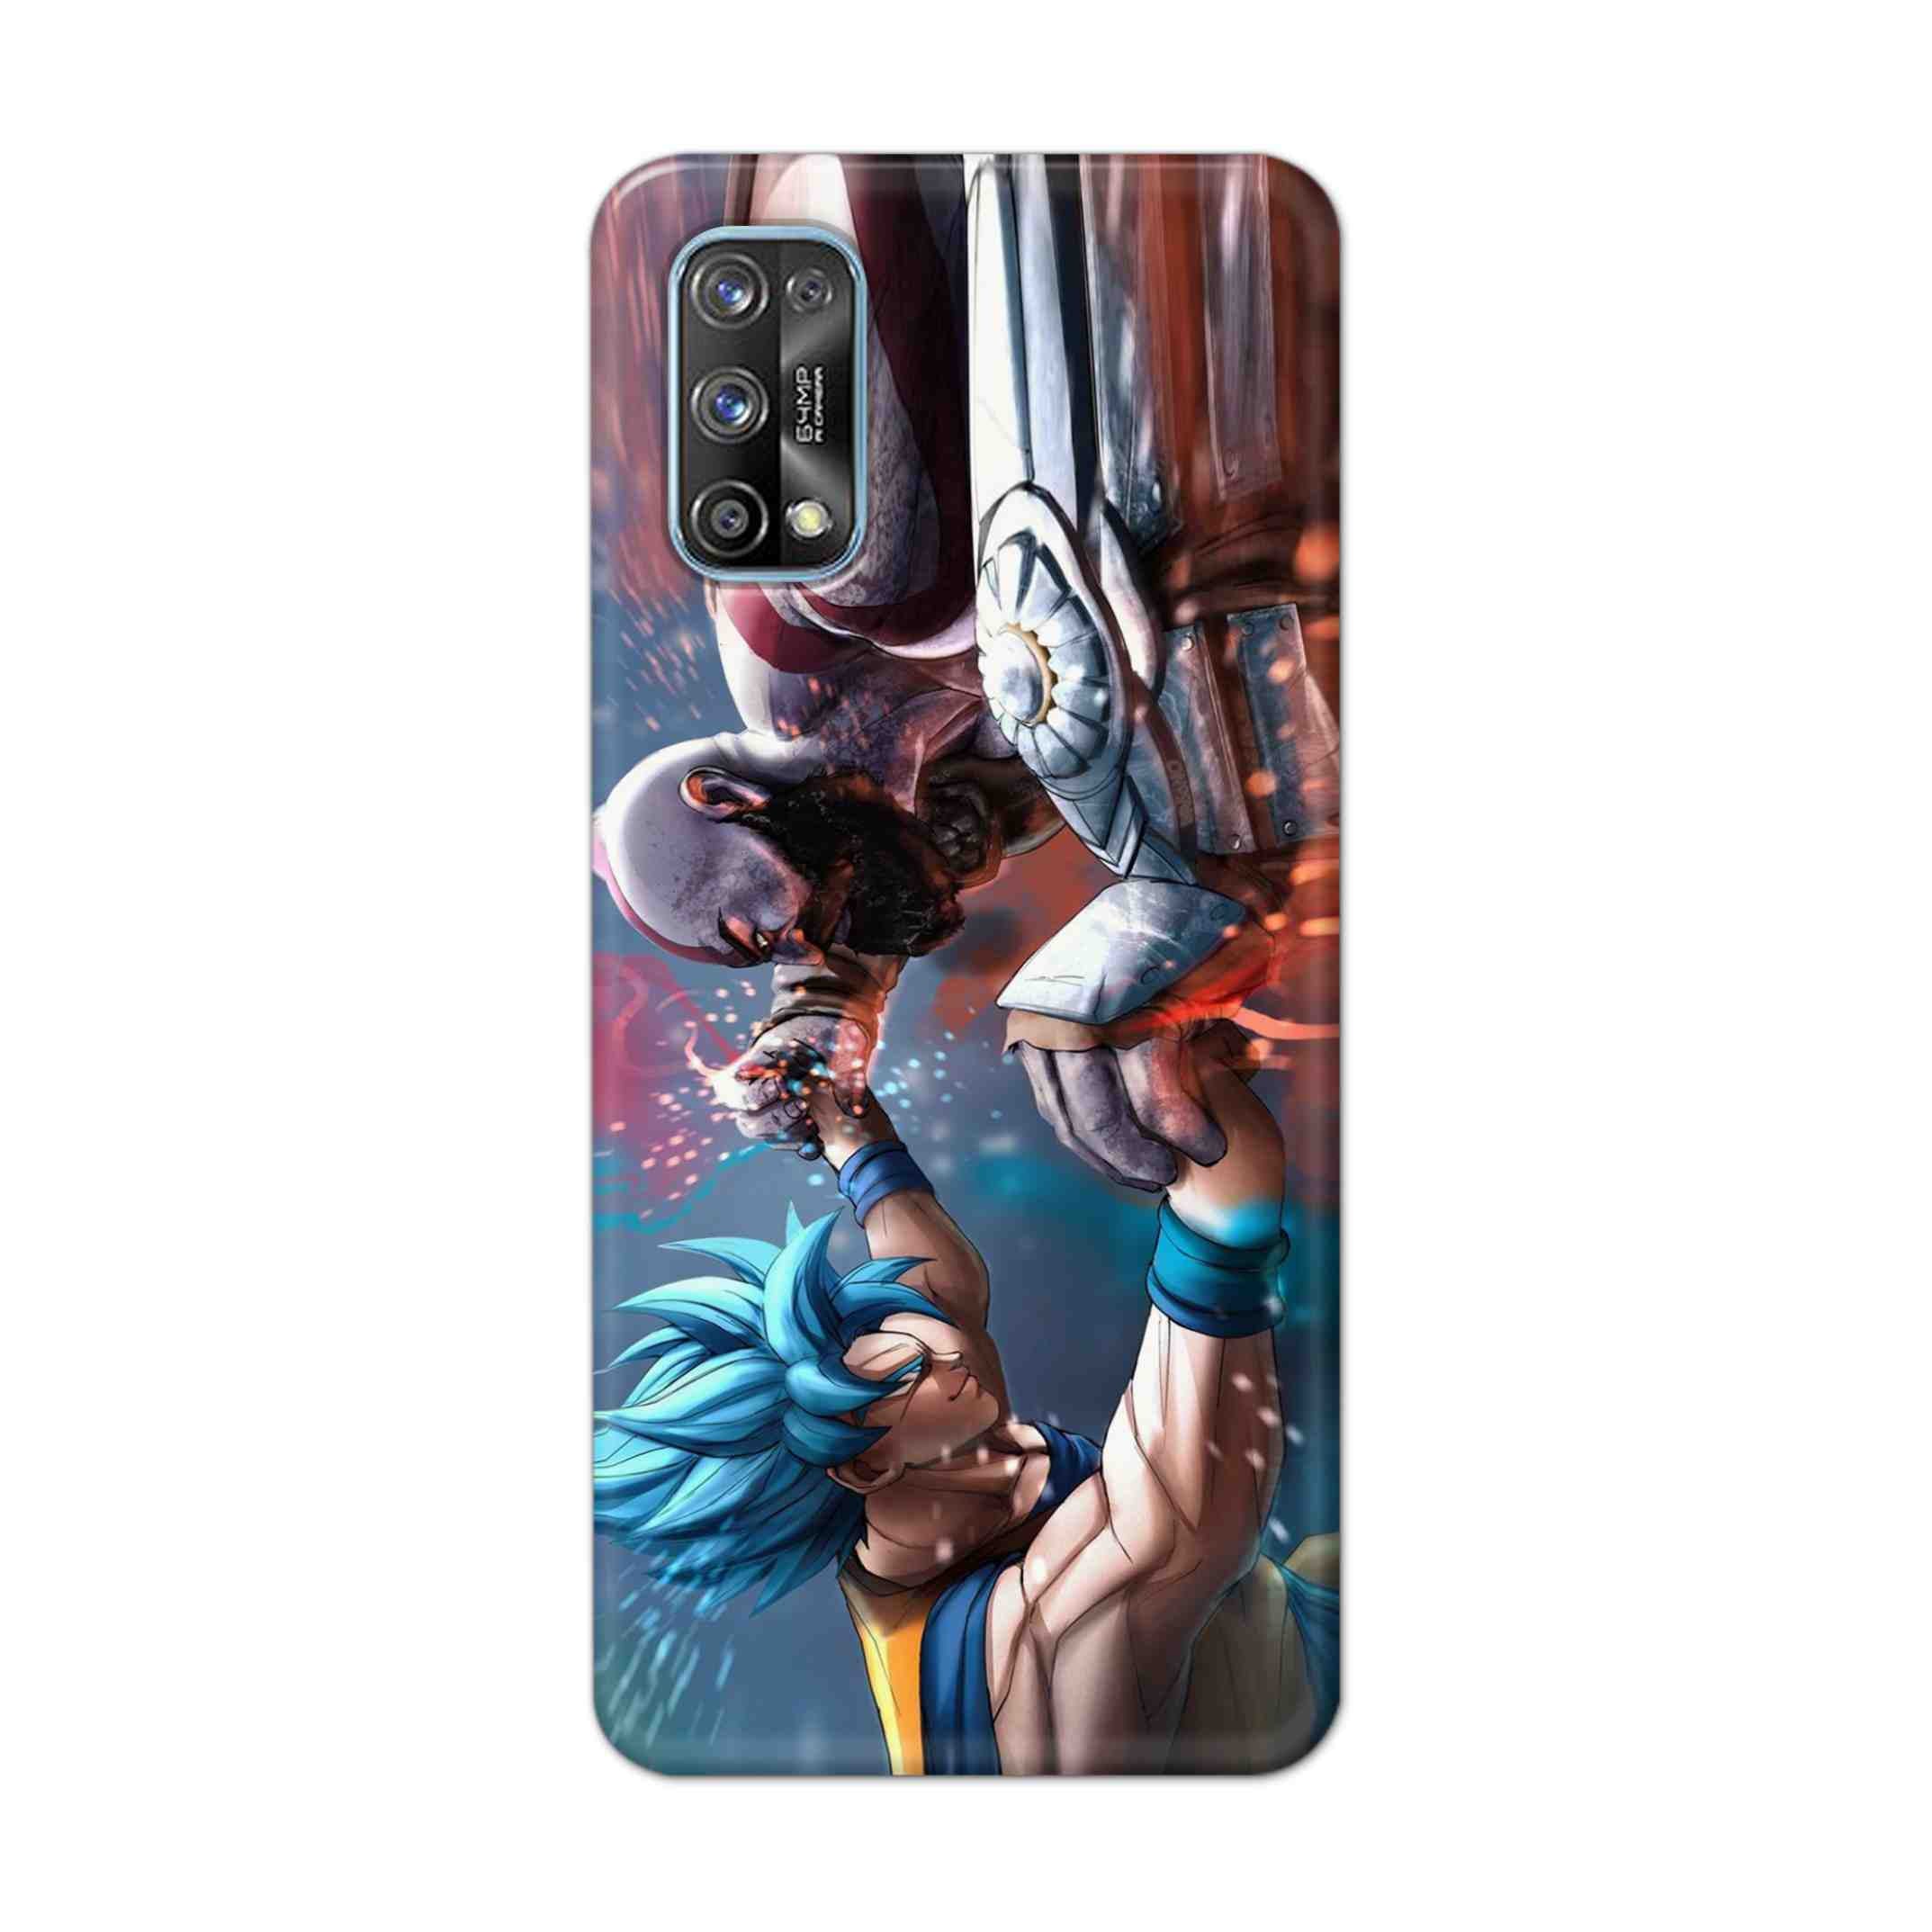 Buy Goku Vs Kratos Hard Back Mobile Phone Case Cover For Realme 7 Pro Online